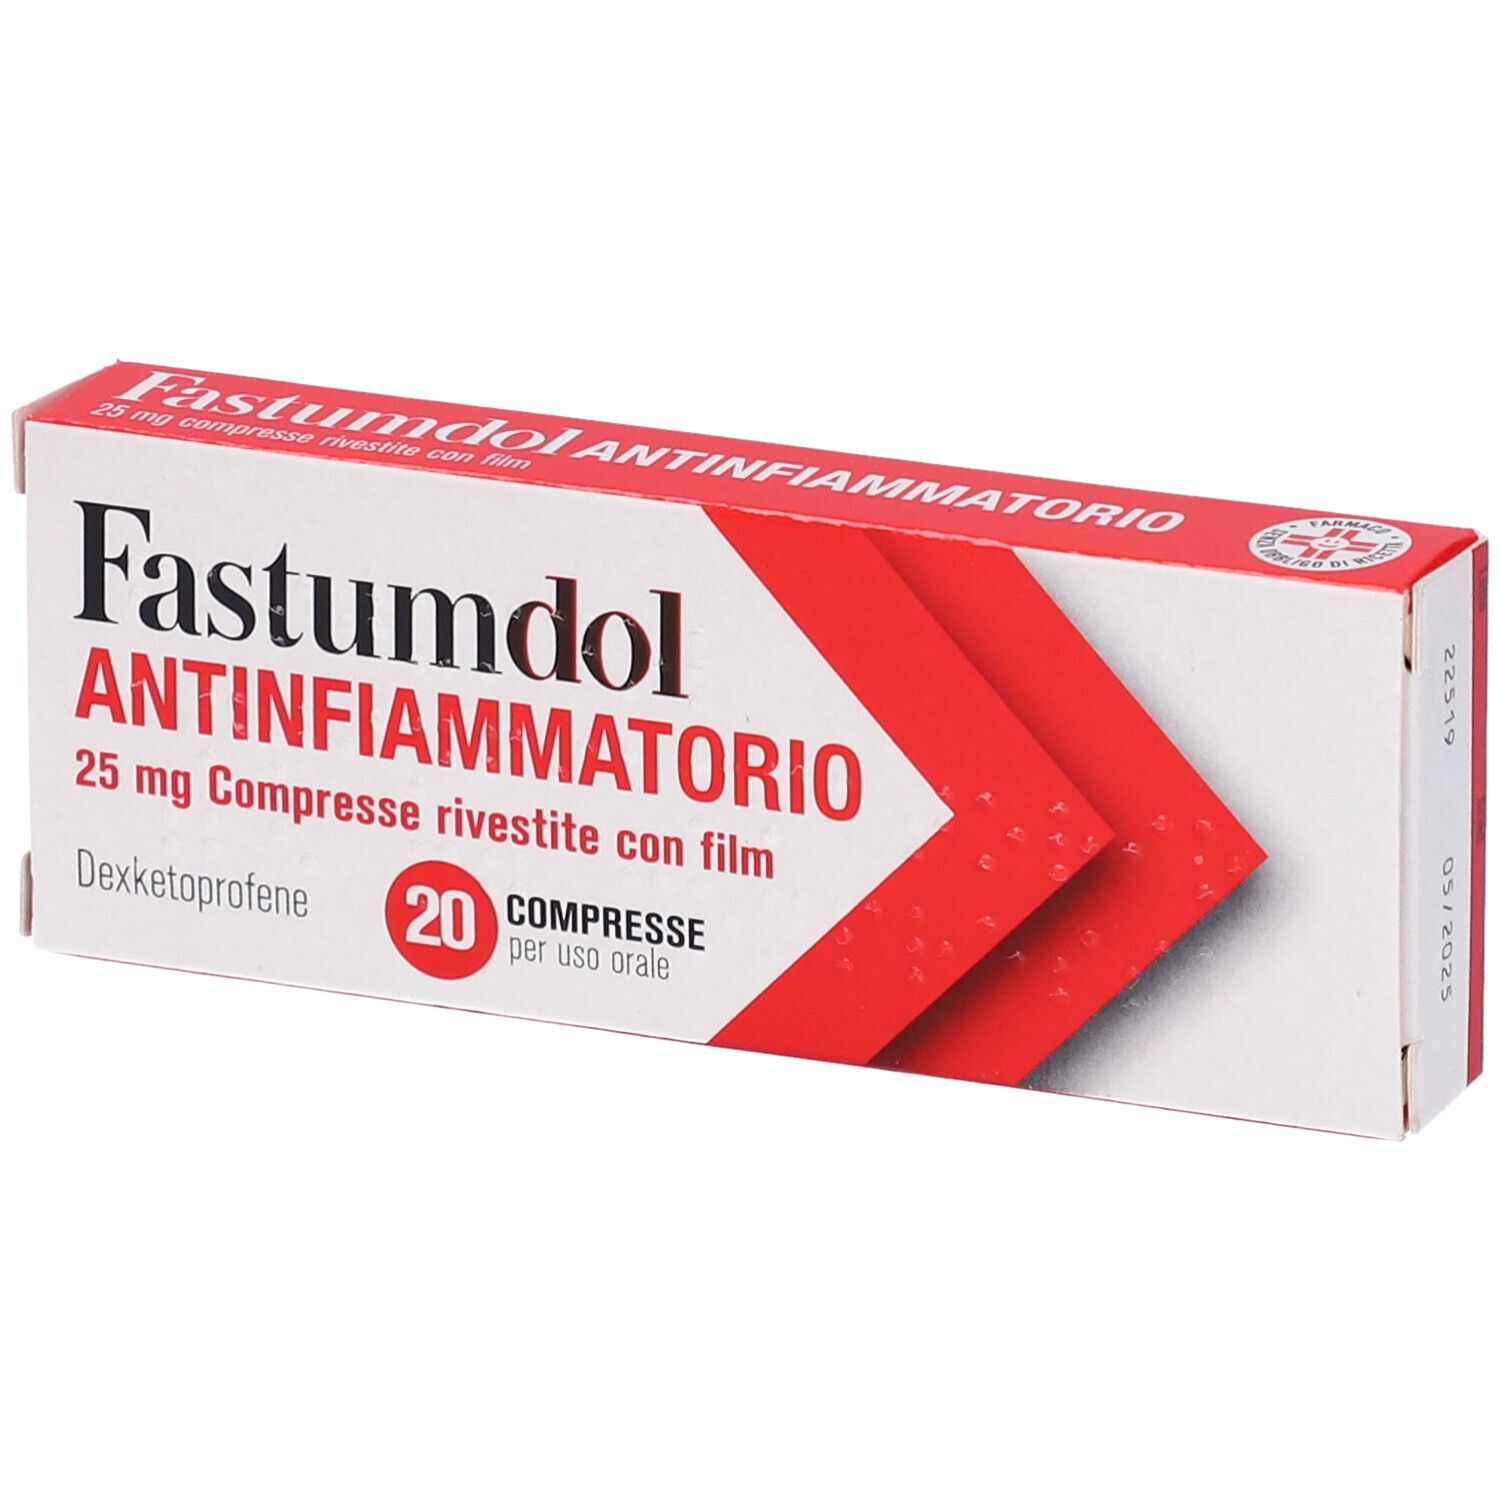 Image of Fastumdol Antinfiammatorio 25 Mg Compresse Rivestite Con Film